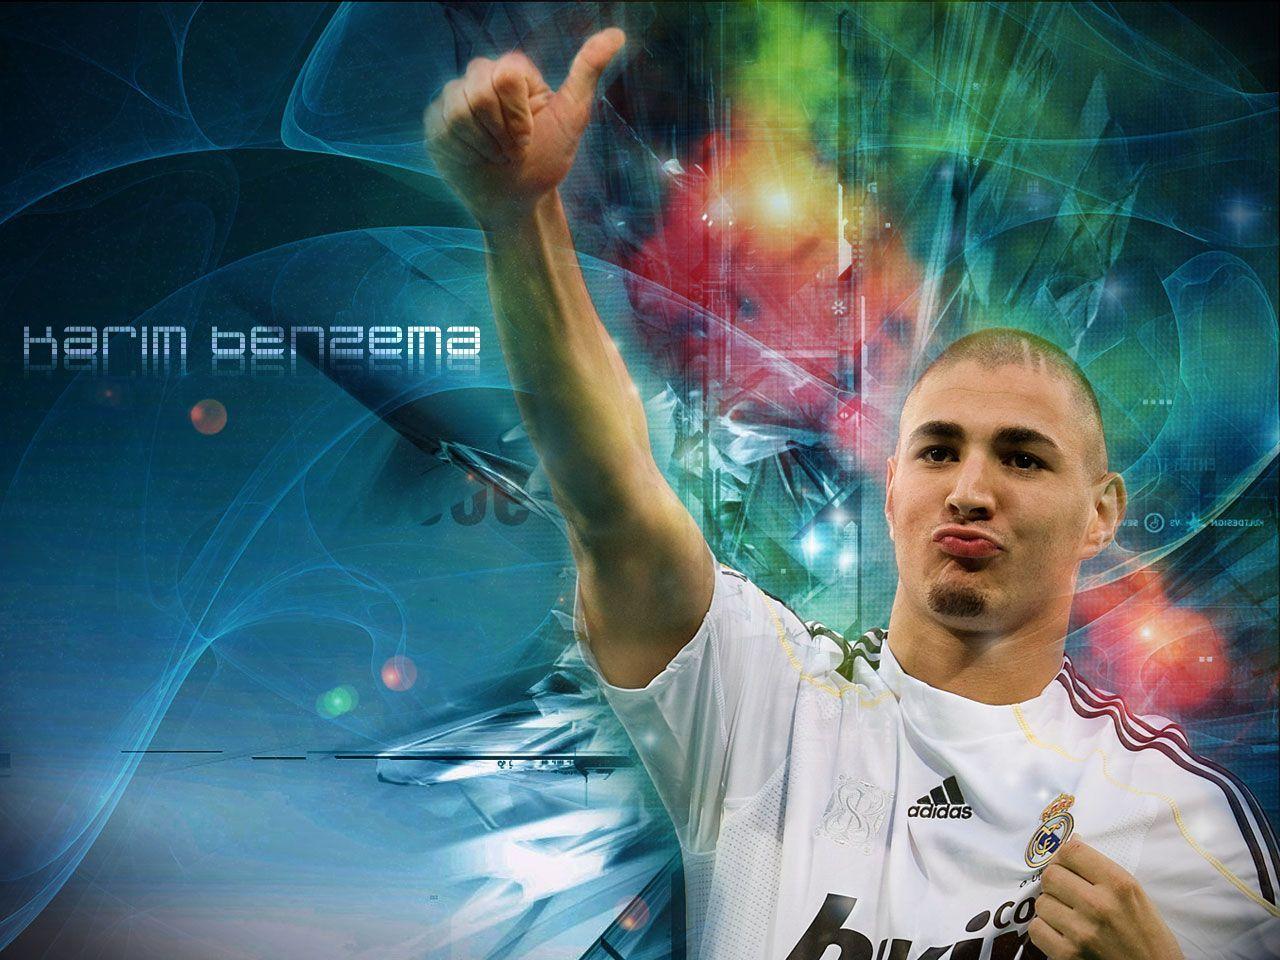 Karim Benzema Real Madrid Wallpaper